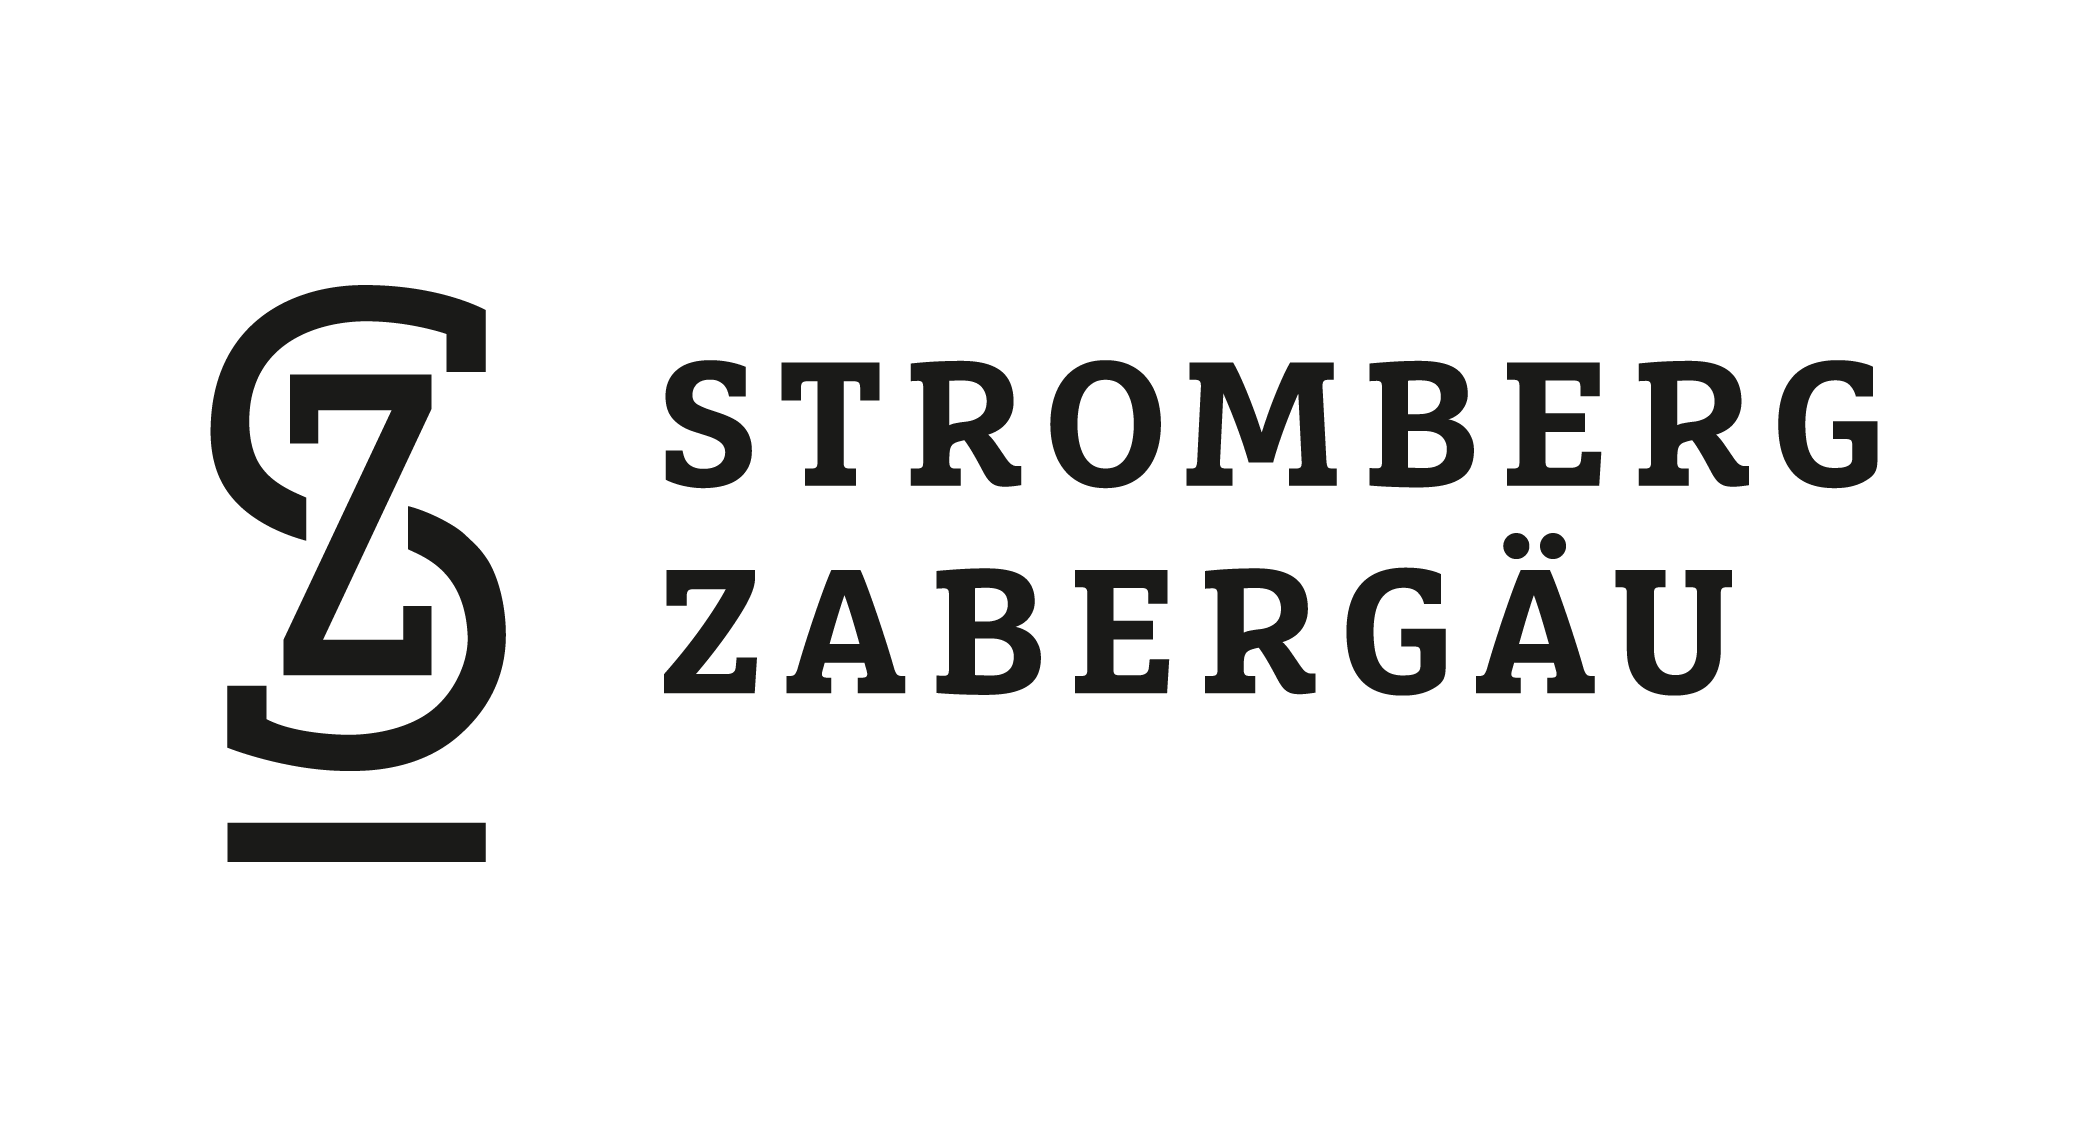 Logo Weingärtner Stromberg-Zabergäu eG